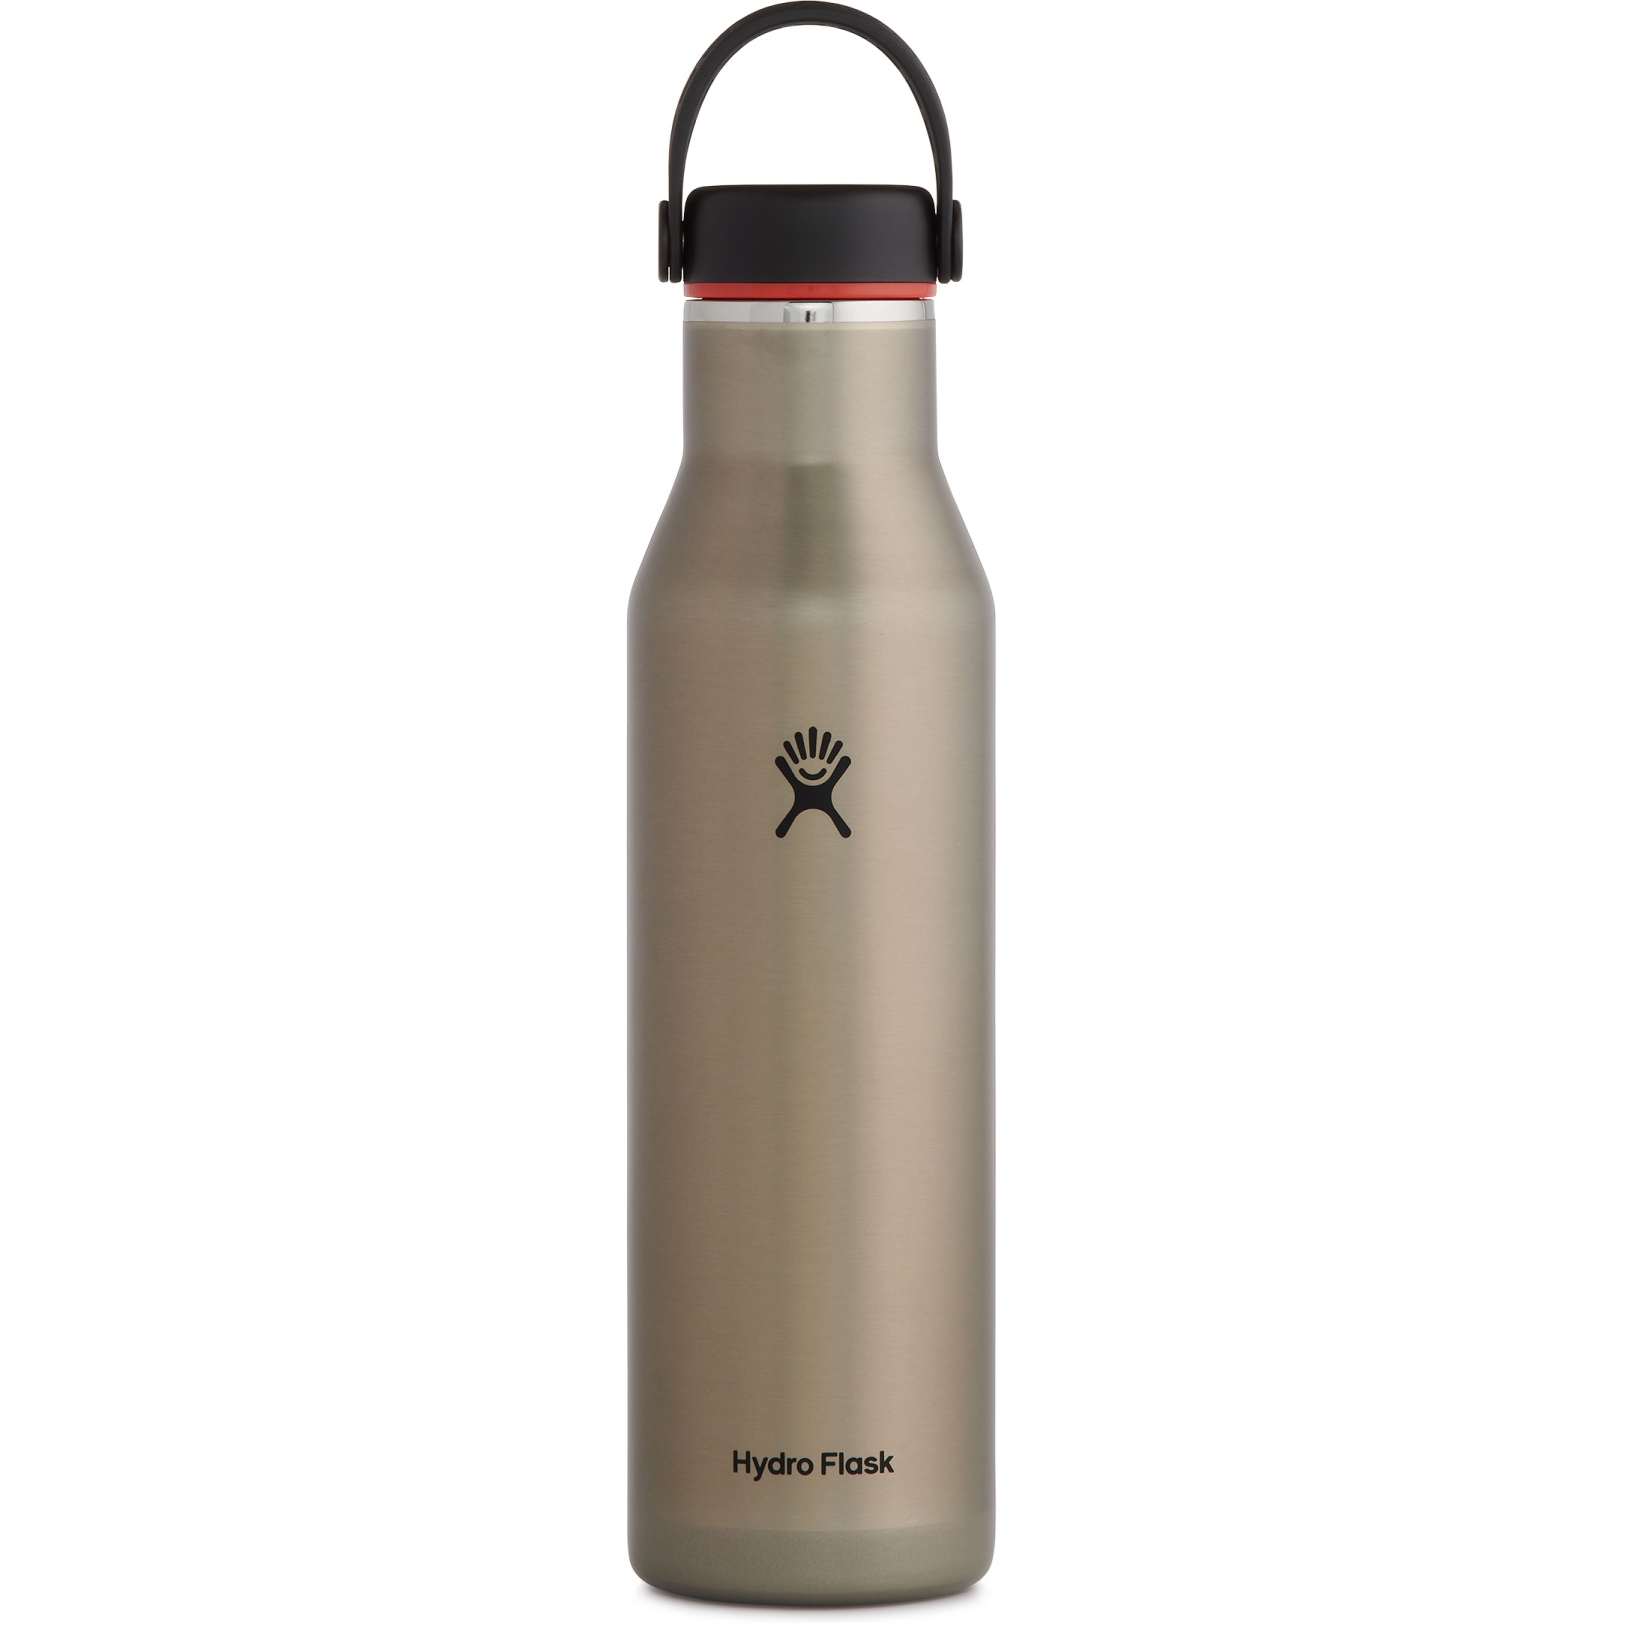 Productfoto van Hydro Flask 21oz Lightweight Standard Mouth Insulated Bottle + Flex Cap - 621ml - Slate